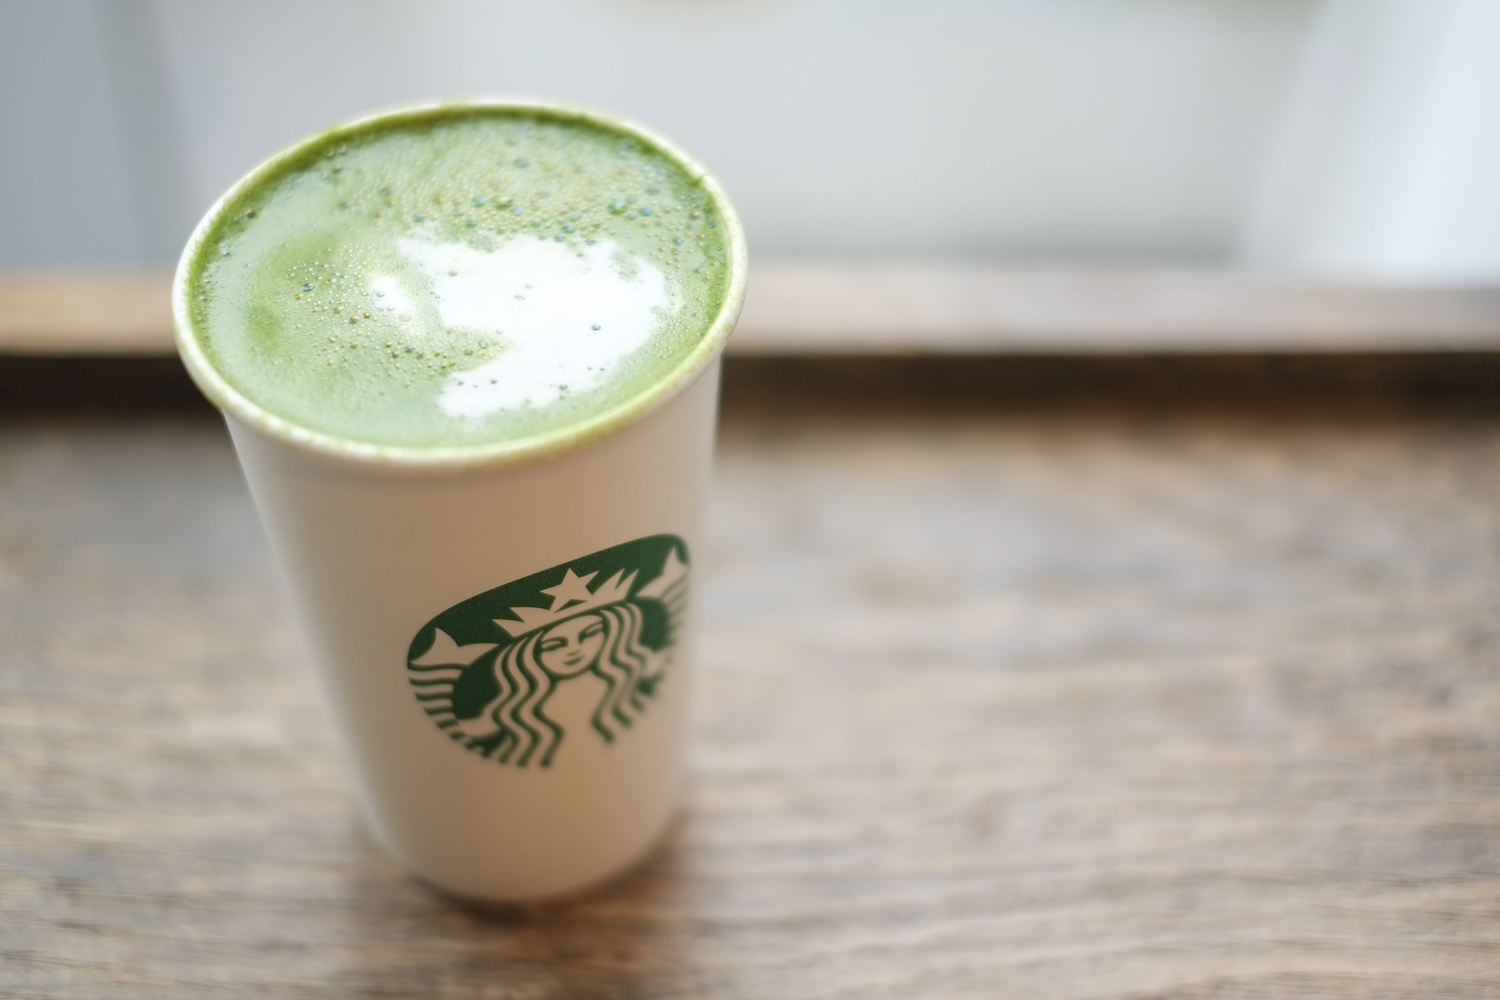 What's in That Starbucks Matcha Drink? – The Tea Shelf